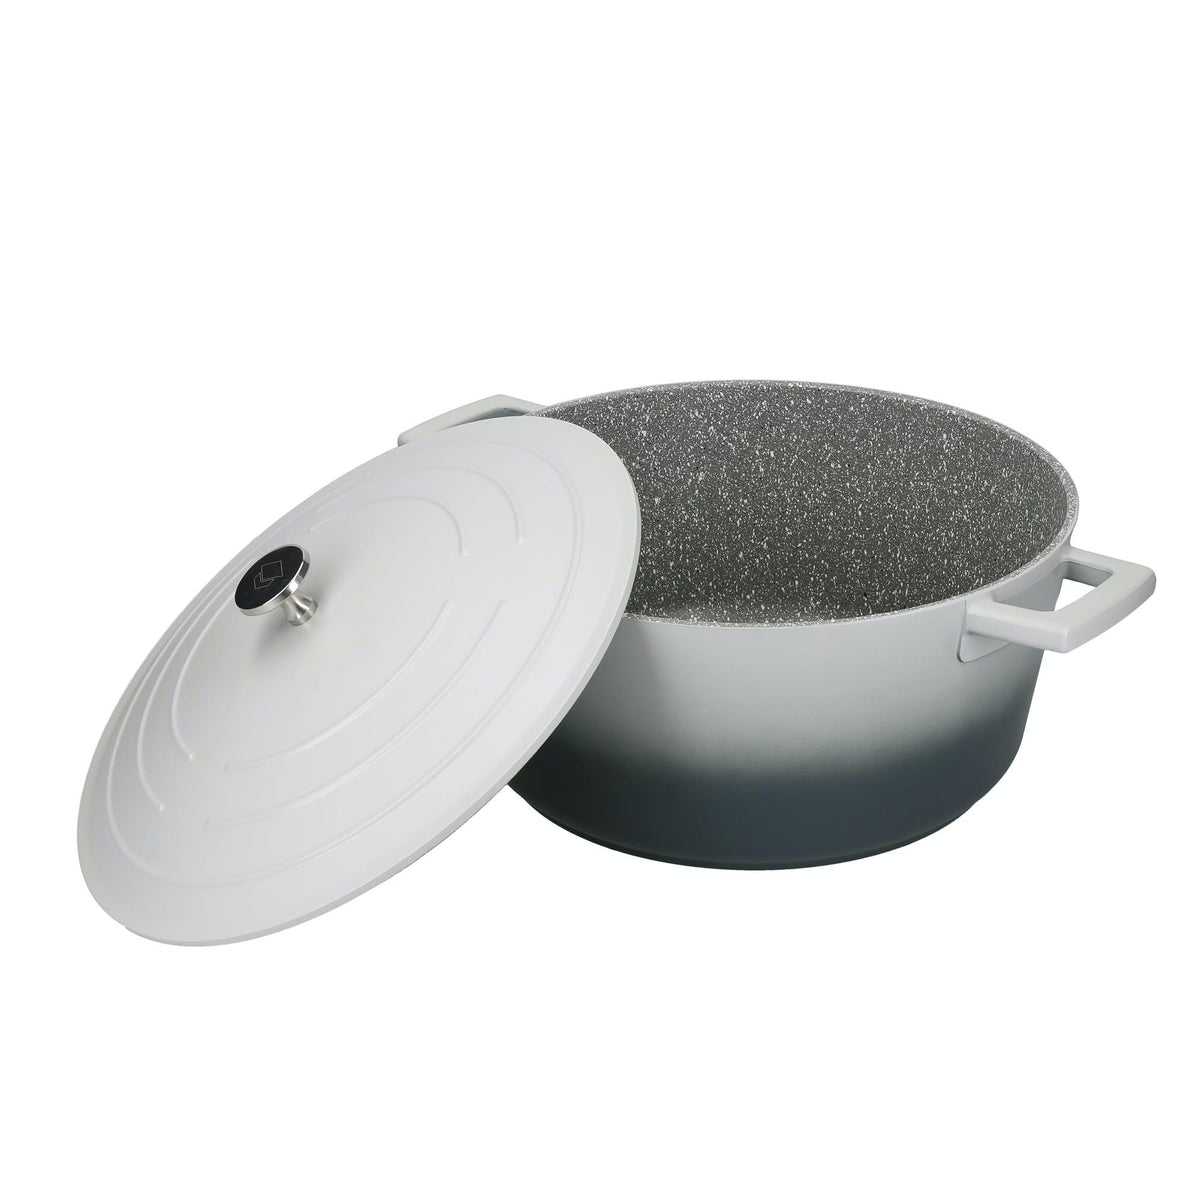 Ombre Grey Cast Aluminum Casserole Dish With Lid 5 Litre - BESPOKE77